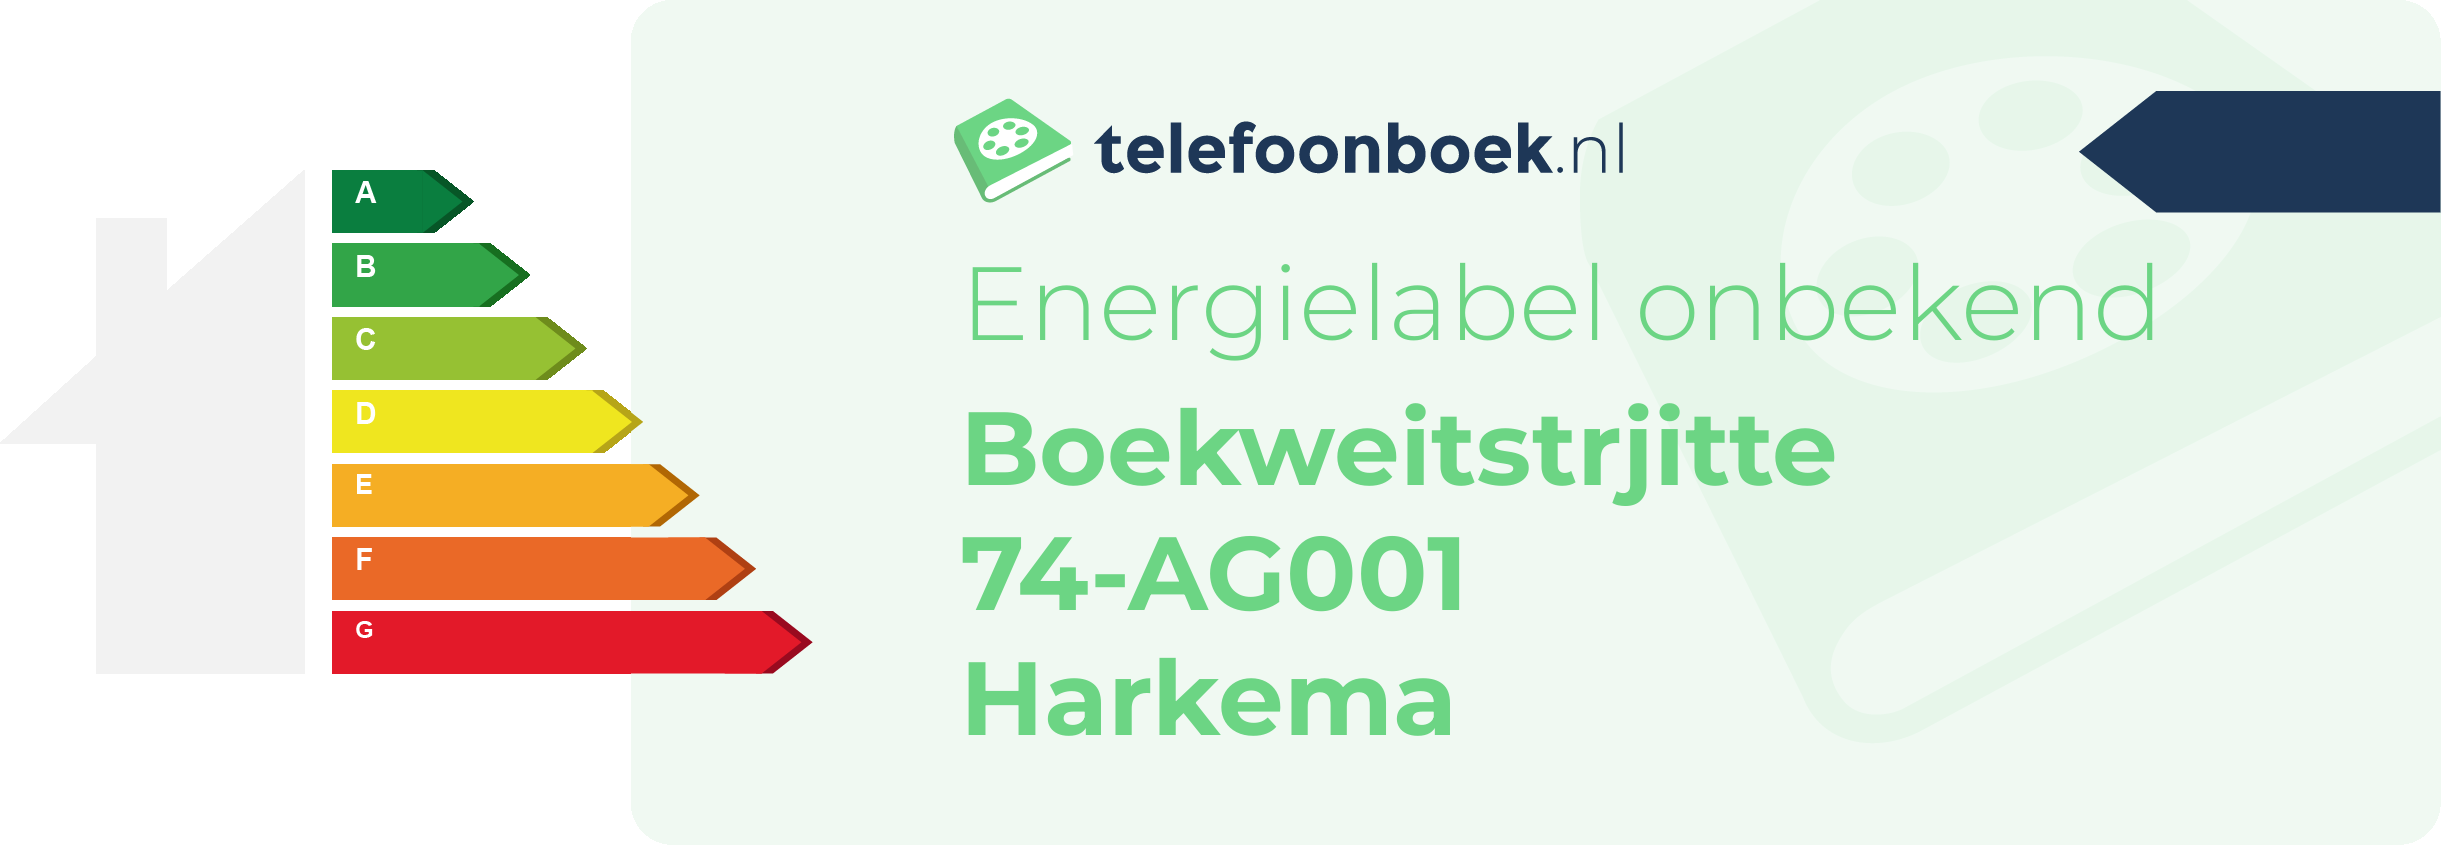 Energielabel Boekweitstrjitte 74-AG001 Harkema